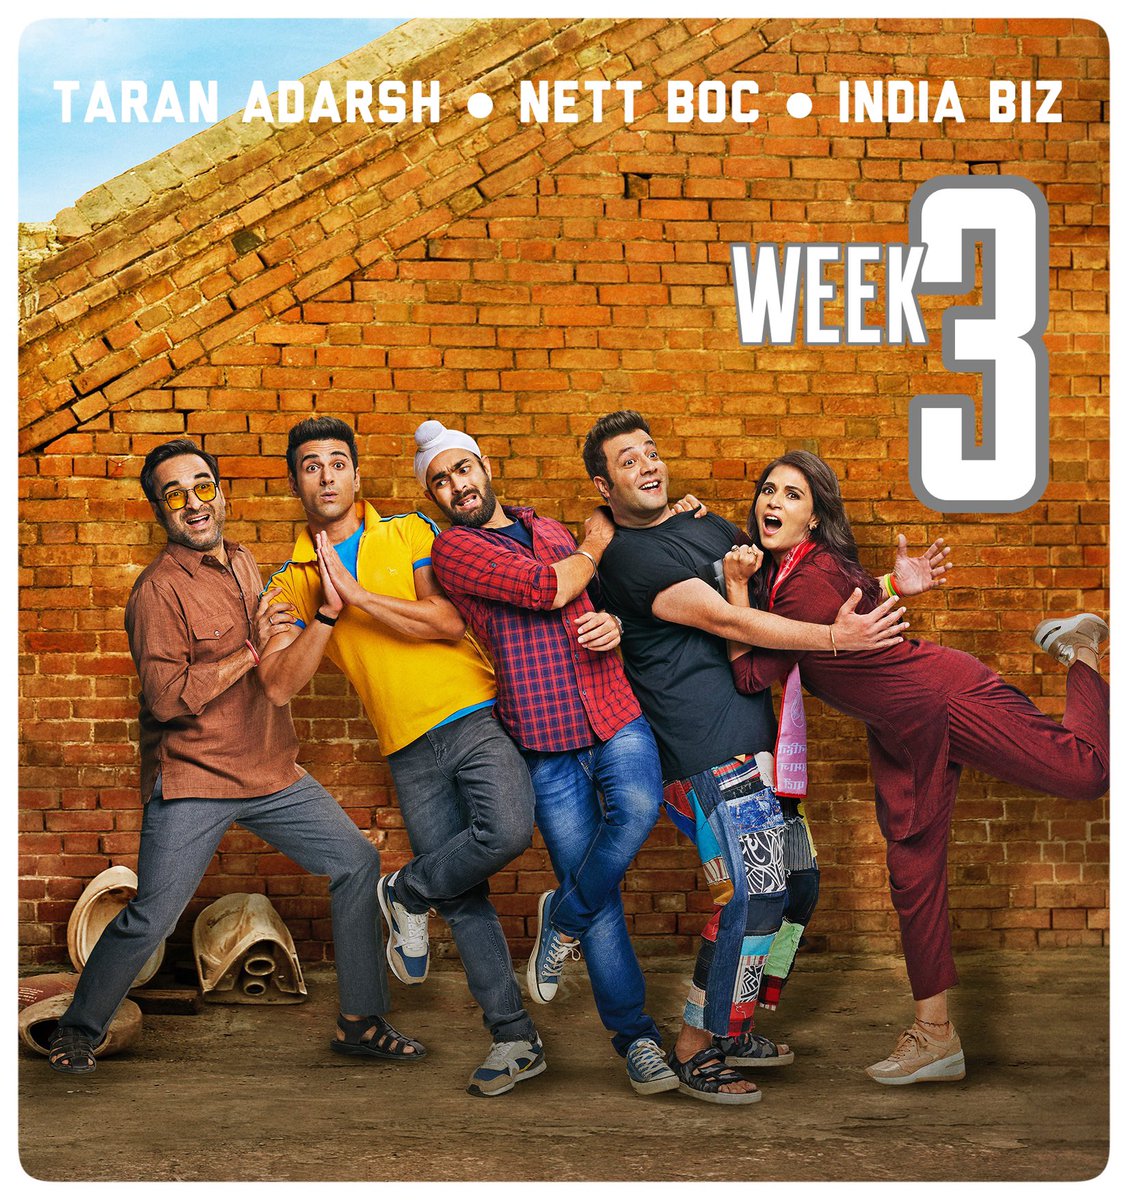 #Fukrey3 [Week 3] Fri 5.10 cr, Sat 2.04 cr, Sun 2.40 cr, Mon 72 lacs, Tue 65 lacs, Wed 61 lacs, Thu 51 lacs. Total: ₹ 93.32 cr. #India biz. #Boxoffice

#Fukrey3 biz at a glance…
⭐️ Week 1: ₹ 66.02 cr [8 days]
⭐️ Week 2: ₹ 15.27 cr
⭐️ Week 3: ₹ 12.03 cr
⭐️ Total: ₹ 93.32 cr